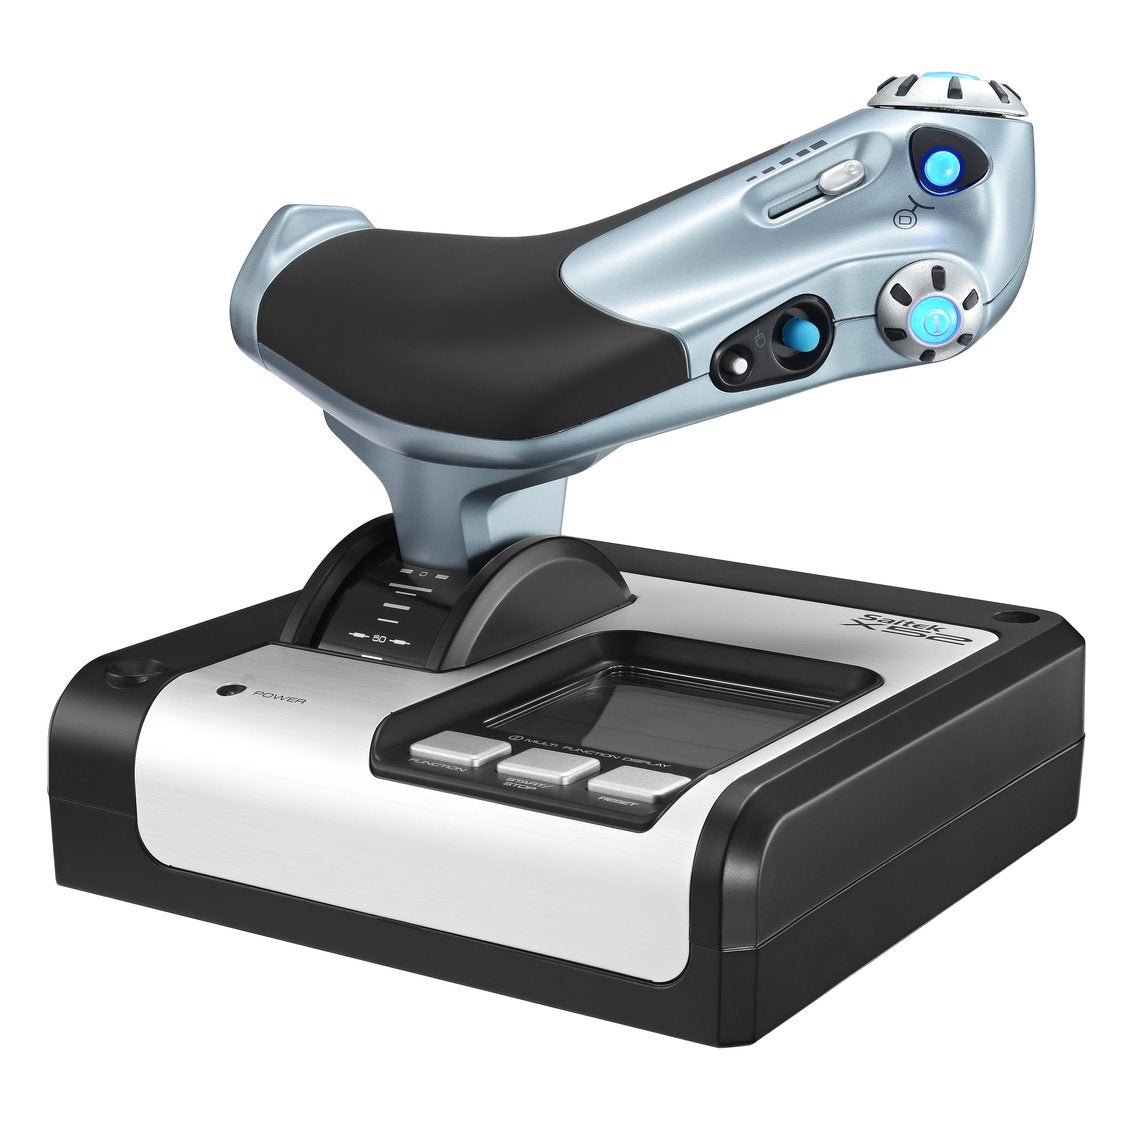 Logitech G Saitek X52 Flight Control System, Controller And Joystick Simulator, Lcd Display, Illuminated Buttons, 2Xusb, Pc - Black/Silver